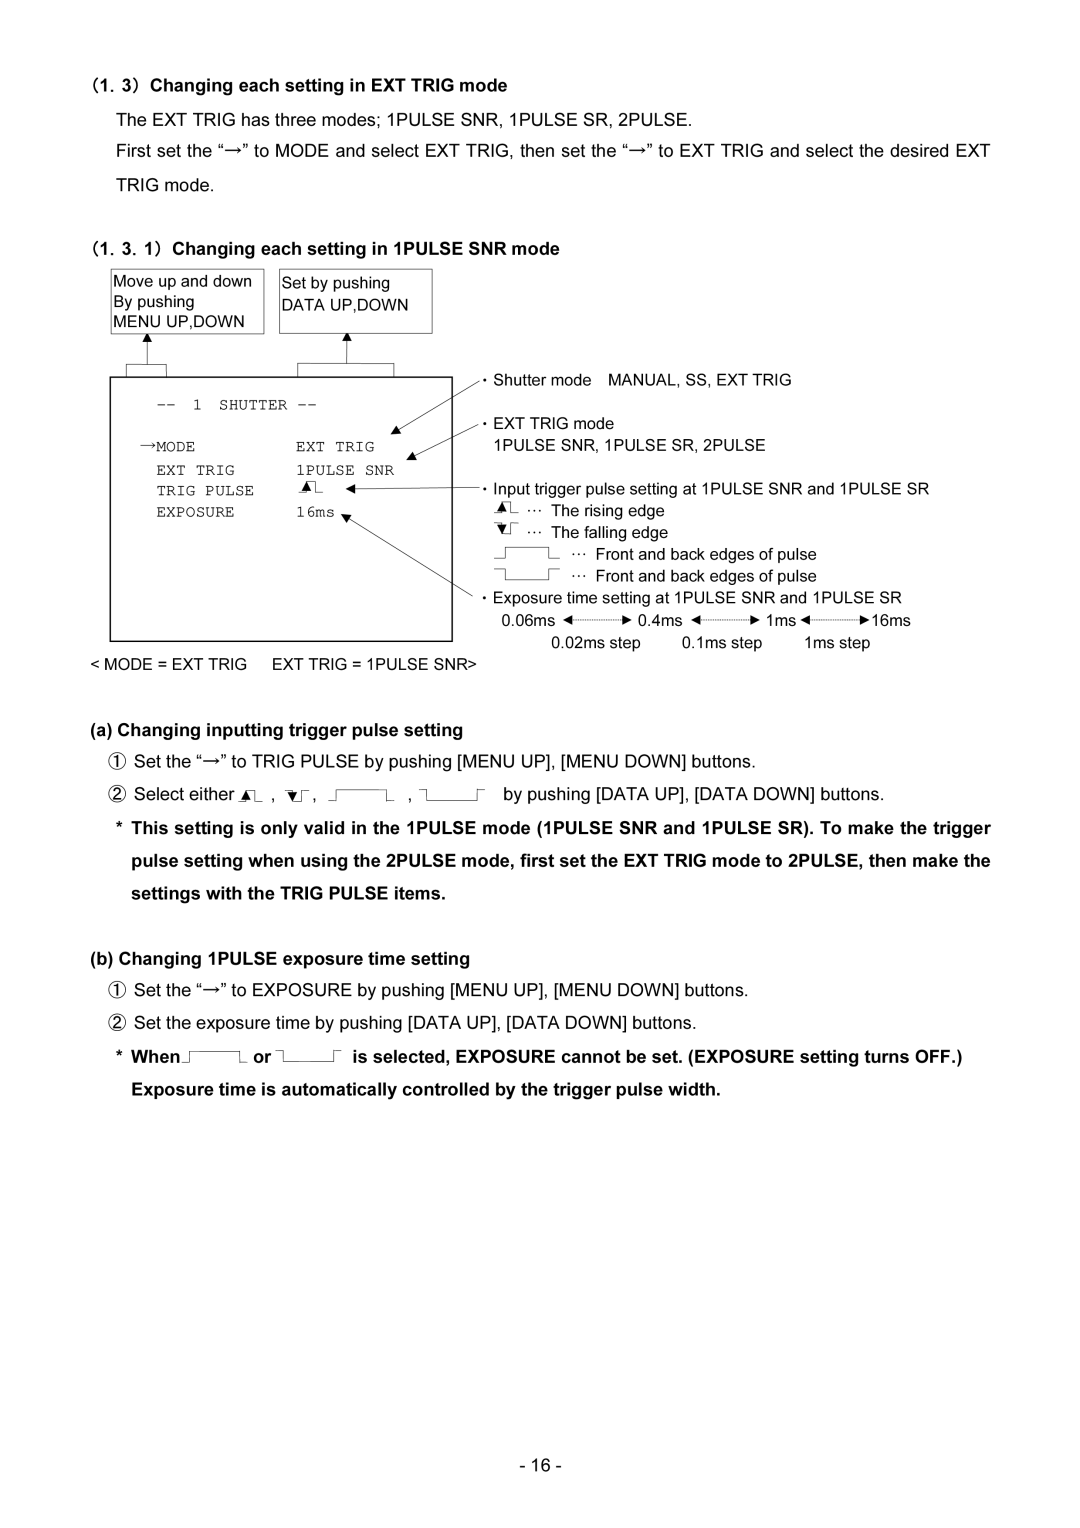 Toshiba IK-TF2 instruction manual Mode EXT Trig 1PULSE SNR Trig Pulse Exposure, 16ms 